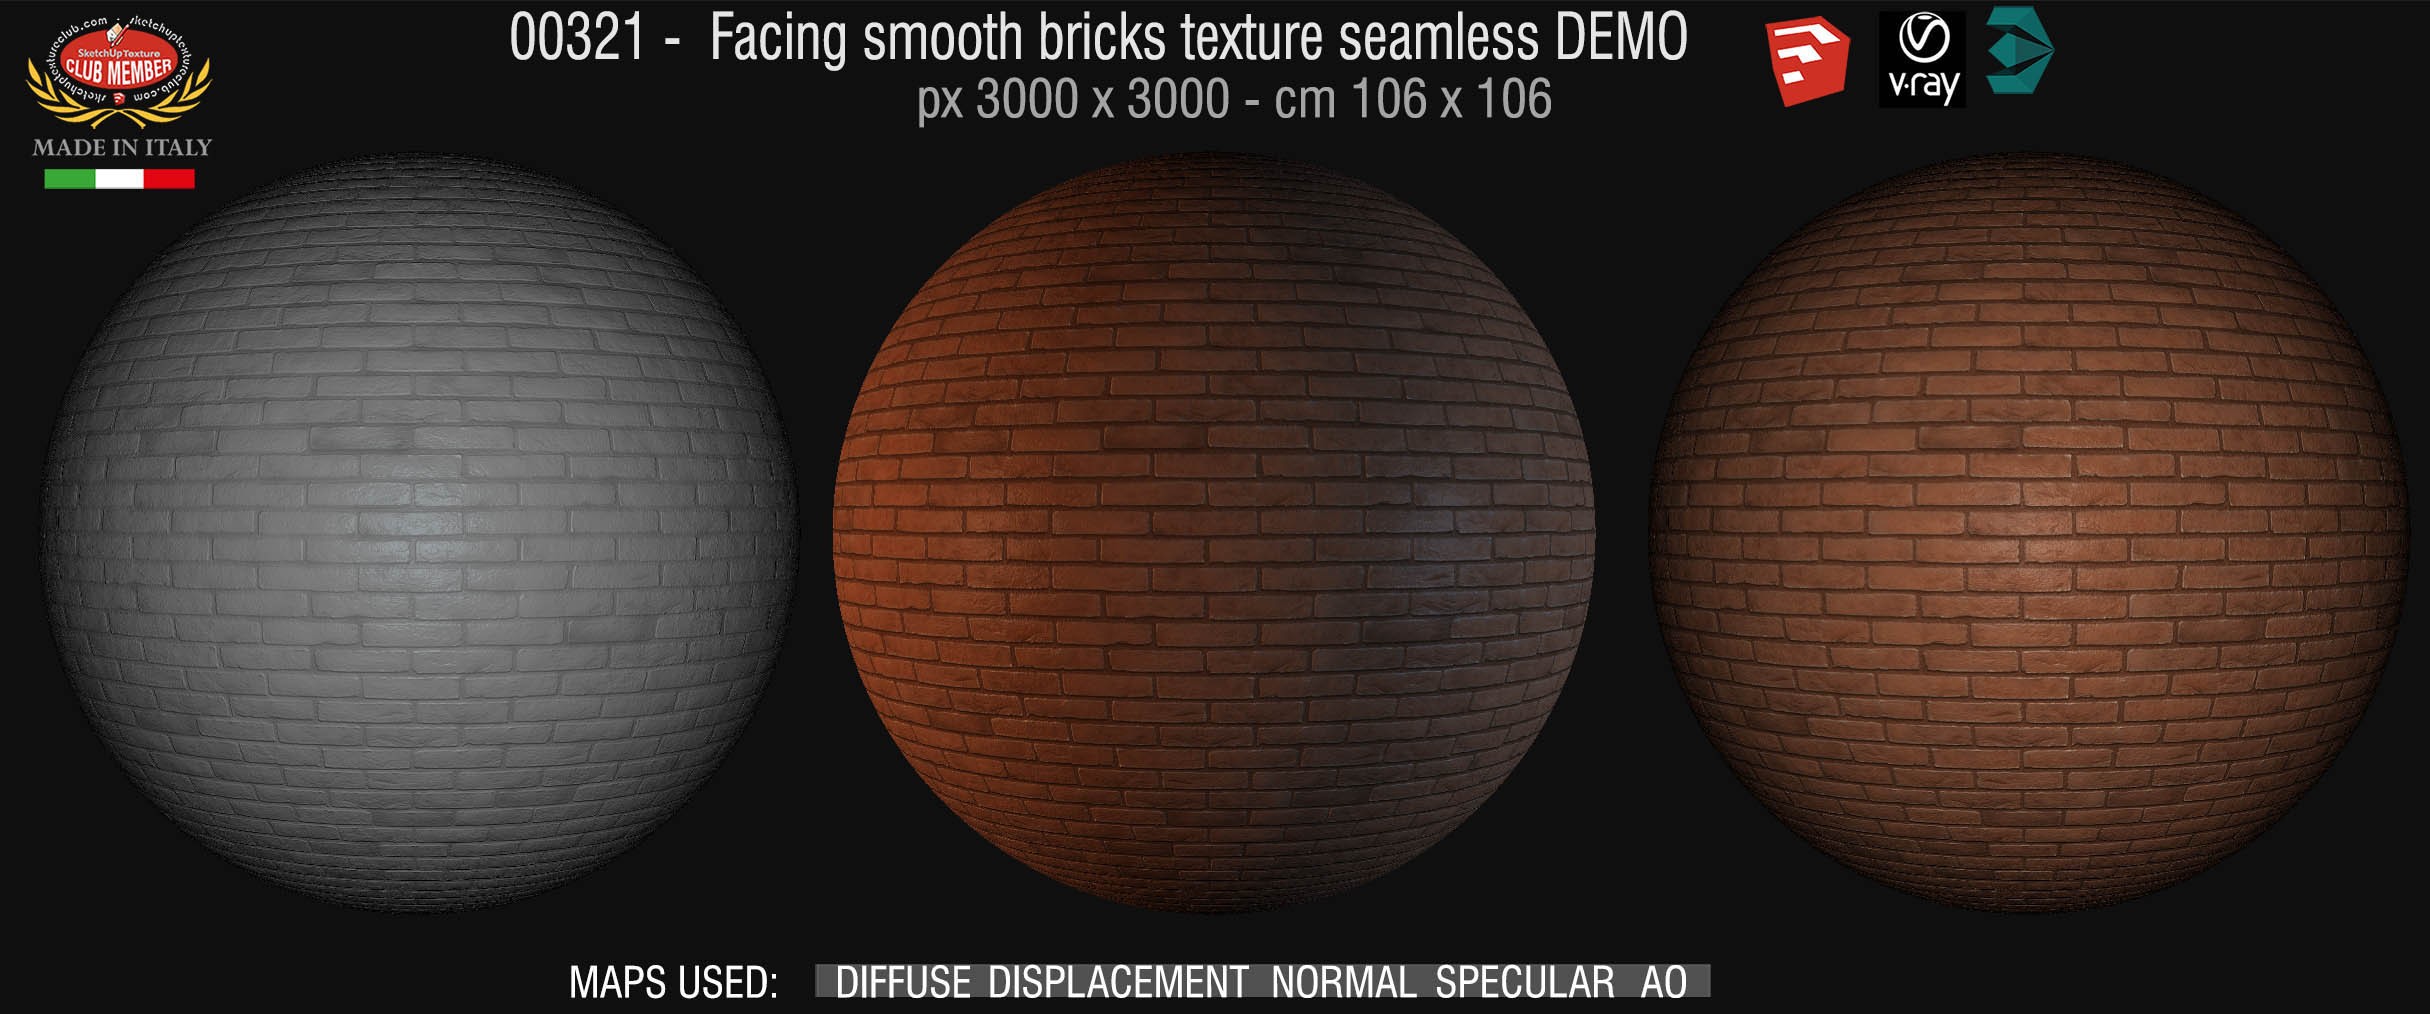 00321 Facing smooth bricks texture seamless + maps DEMO